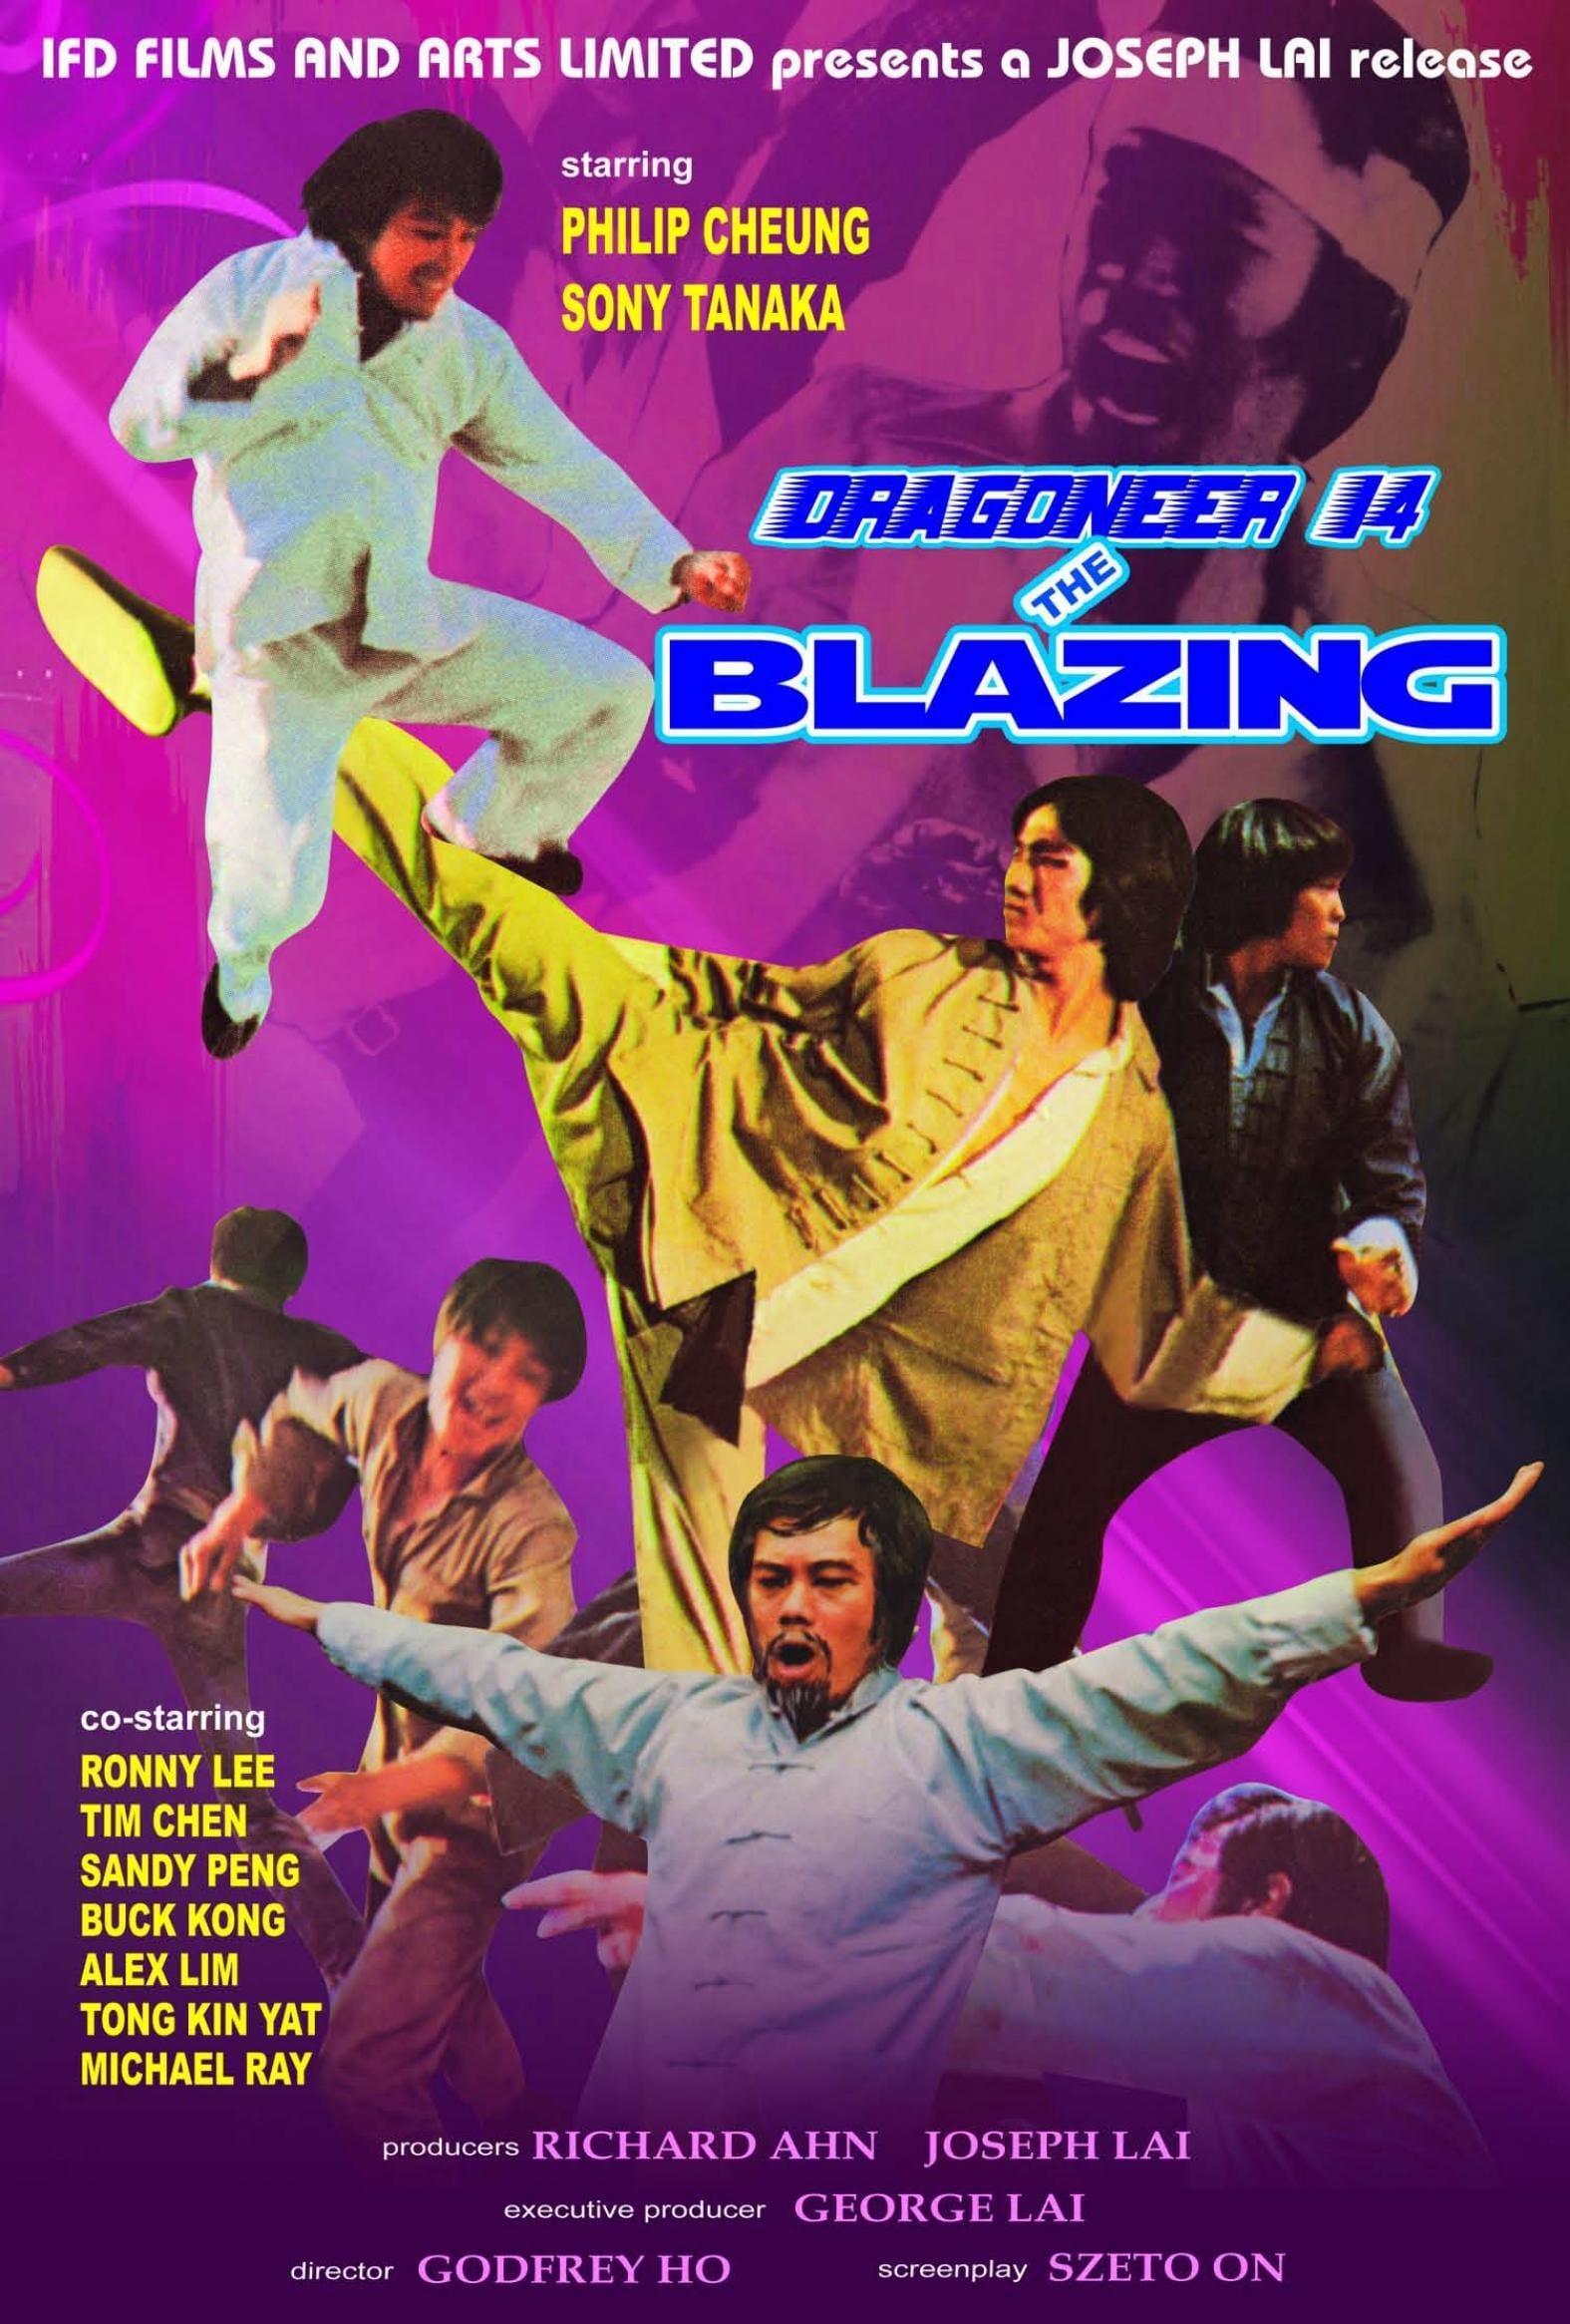 The Blazing Ninja poster